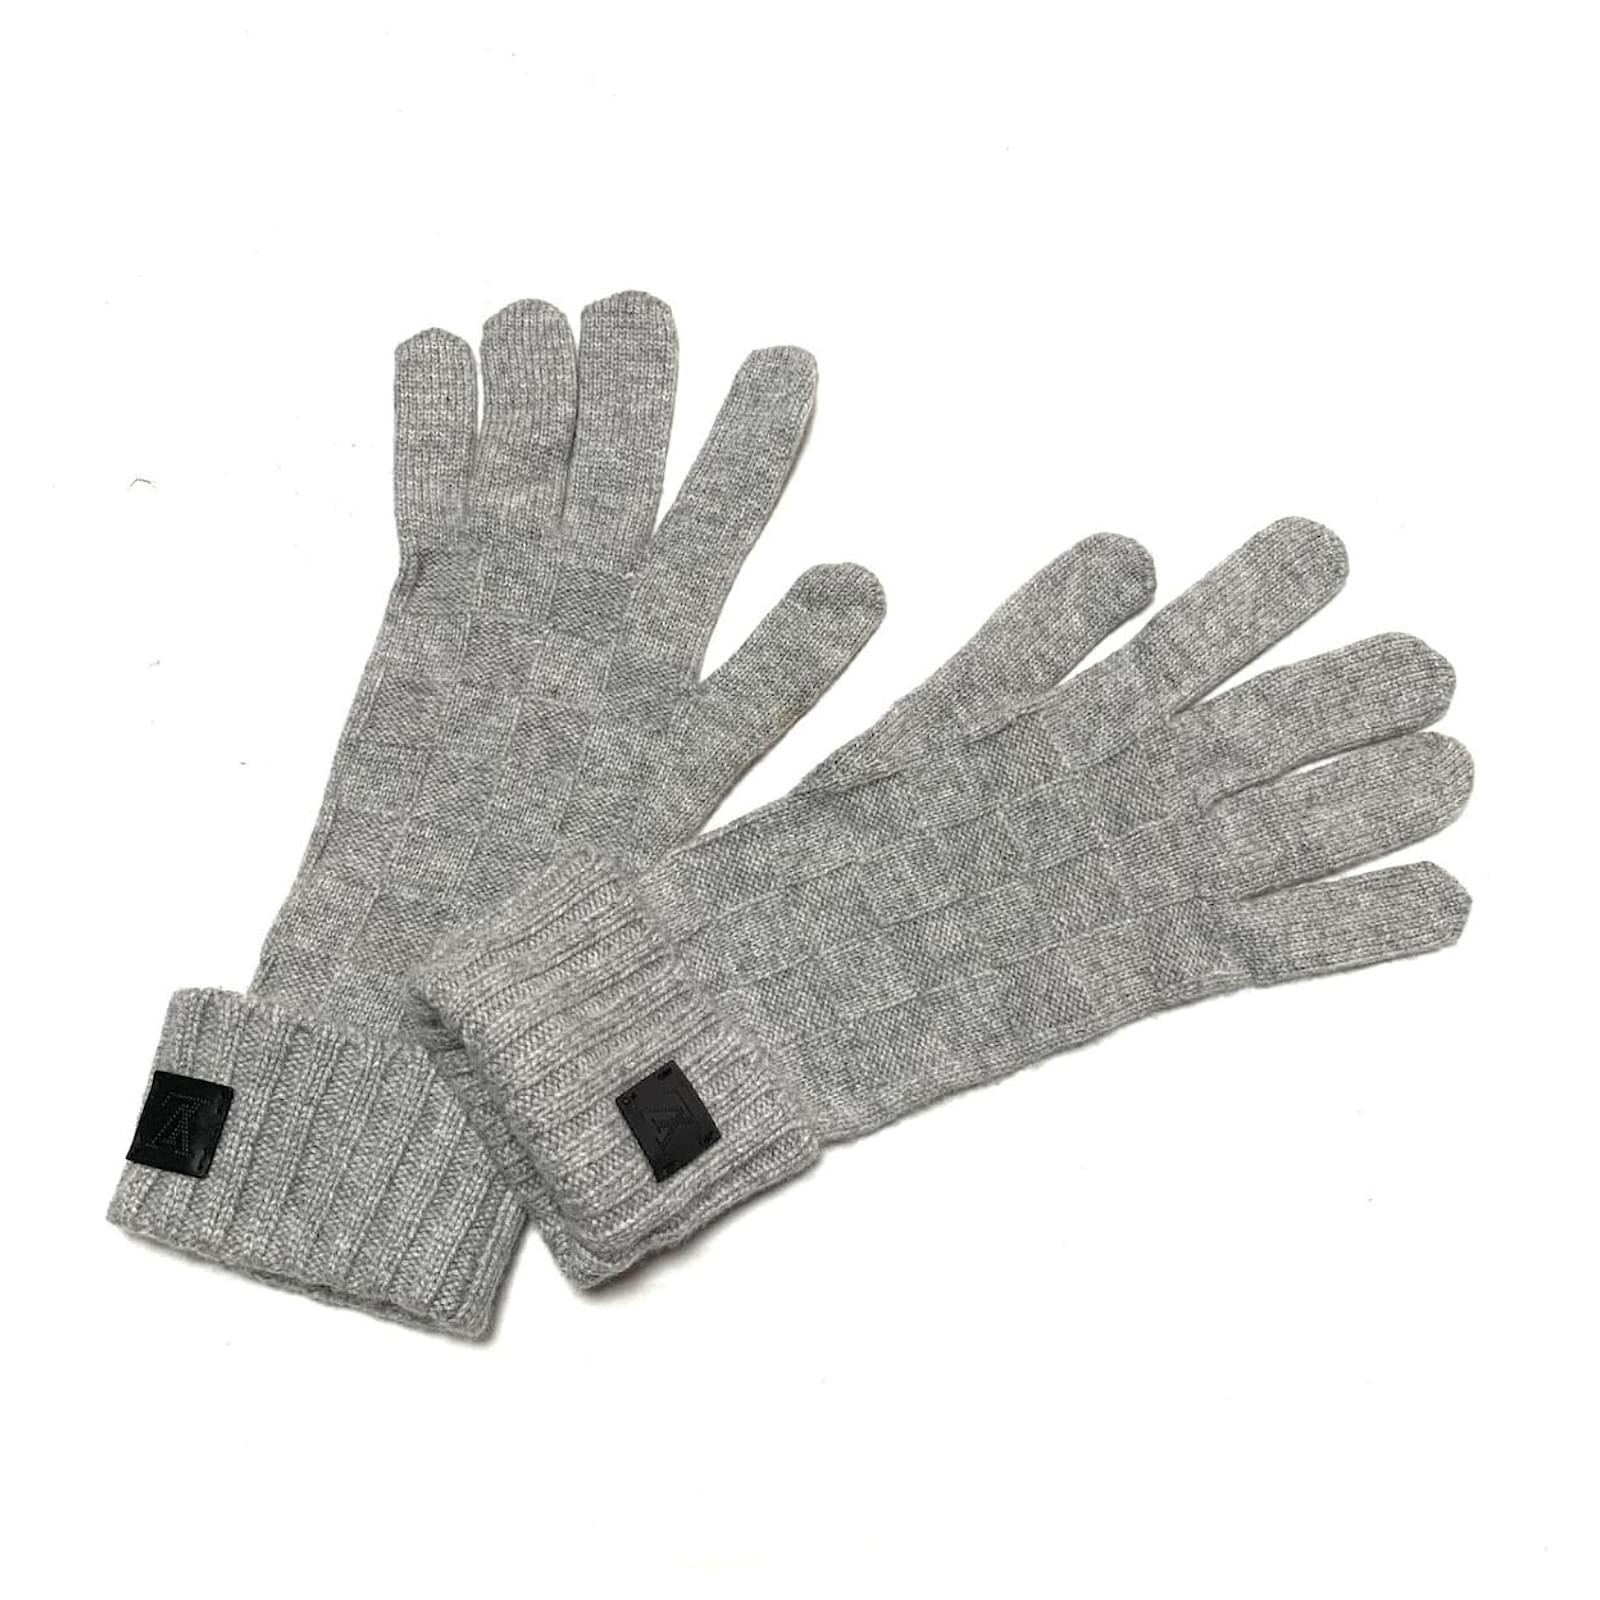 Wool gloves Louis Vuitton Navy size S International in Wool - 16819900